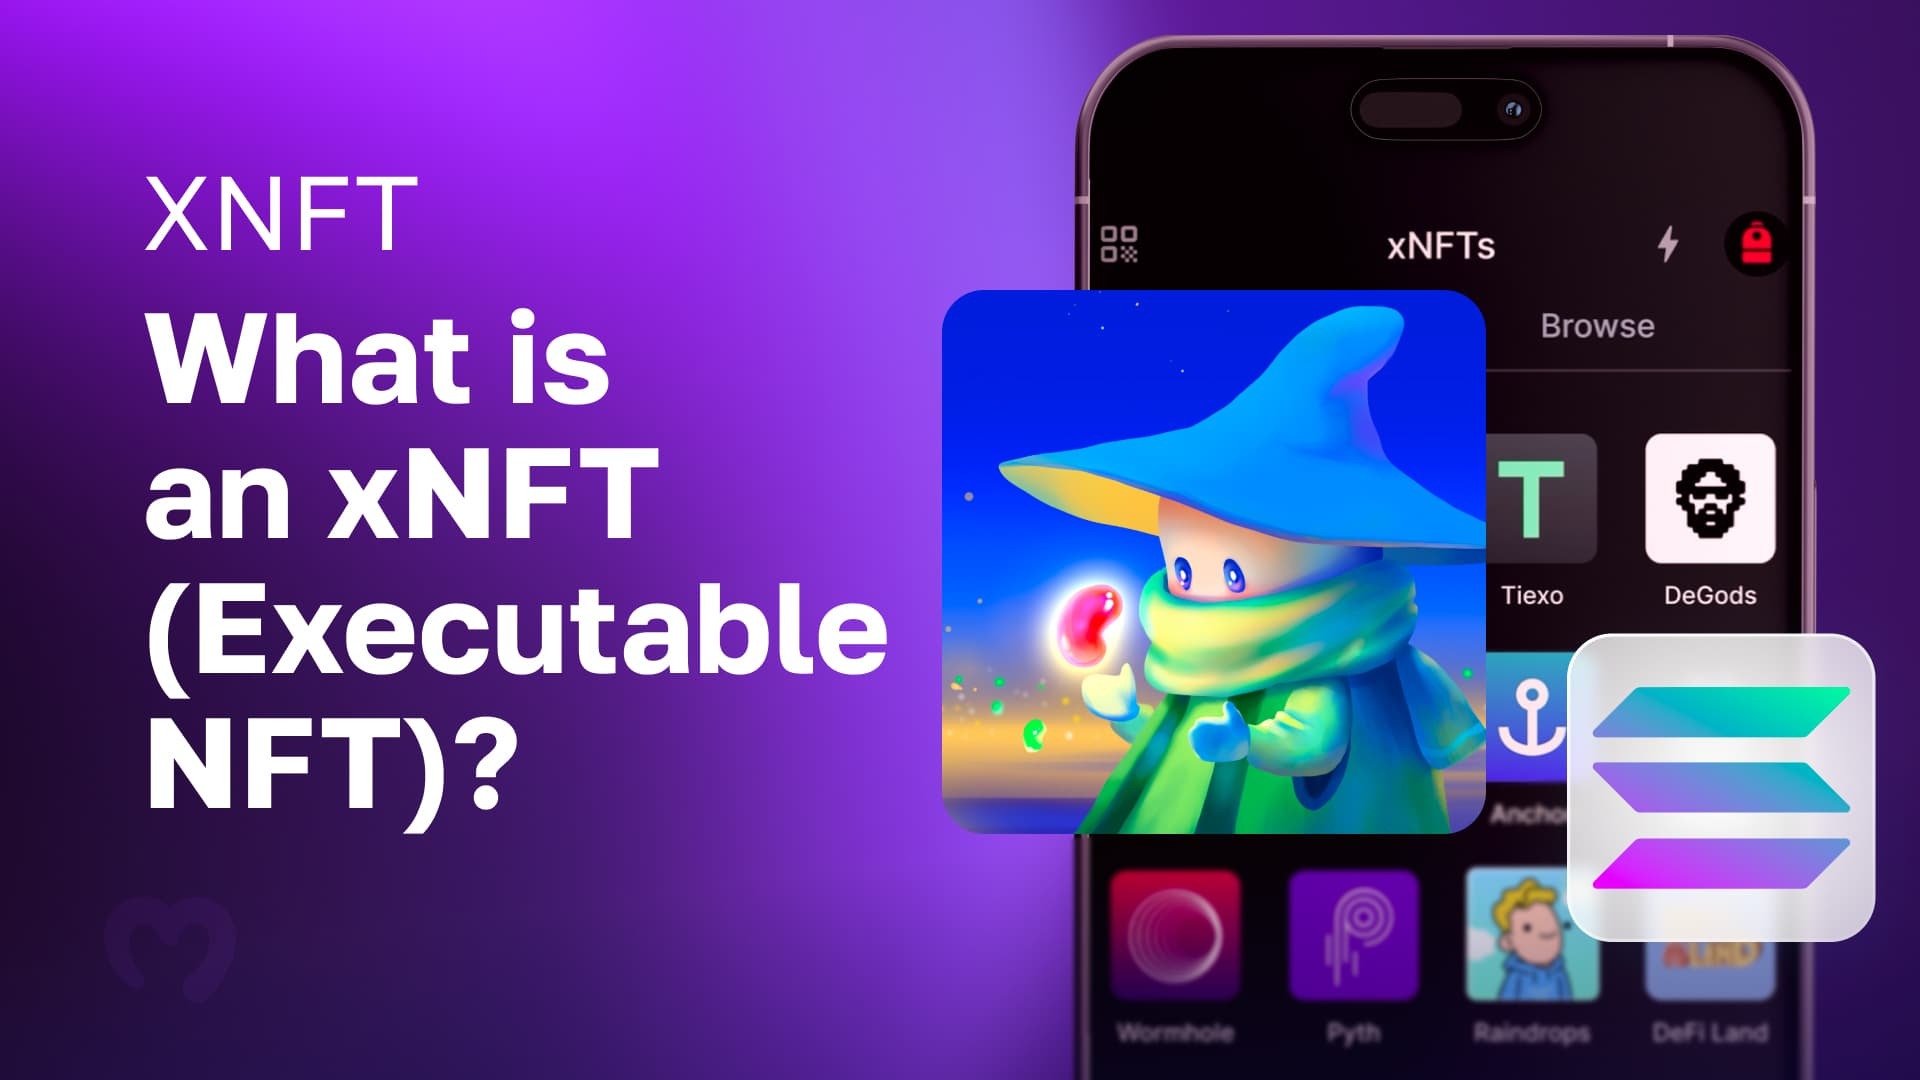 xNFT - What is an xNFT (Executable NFT)?